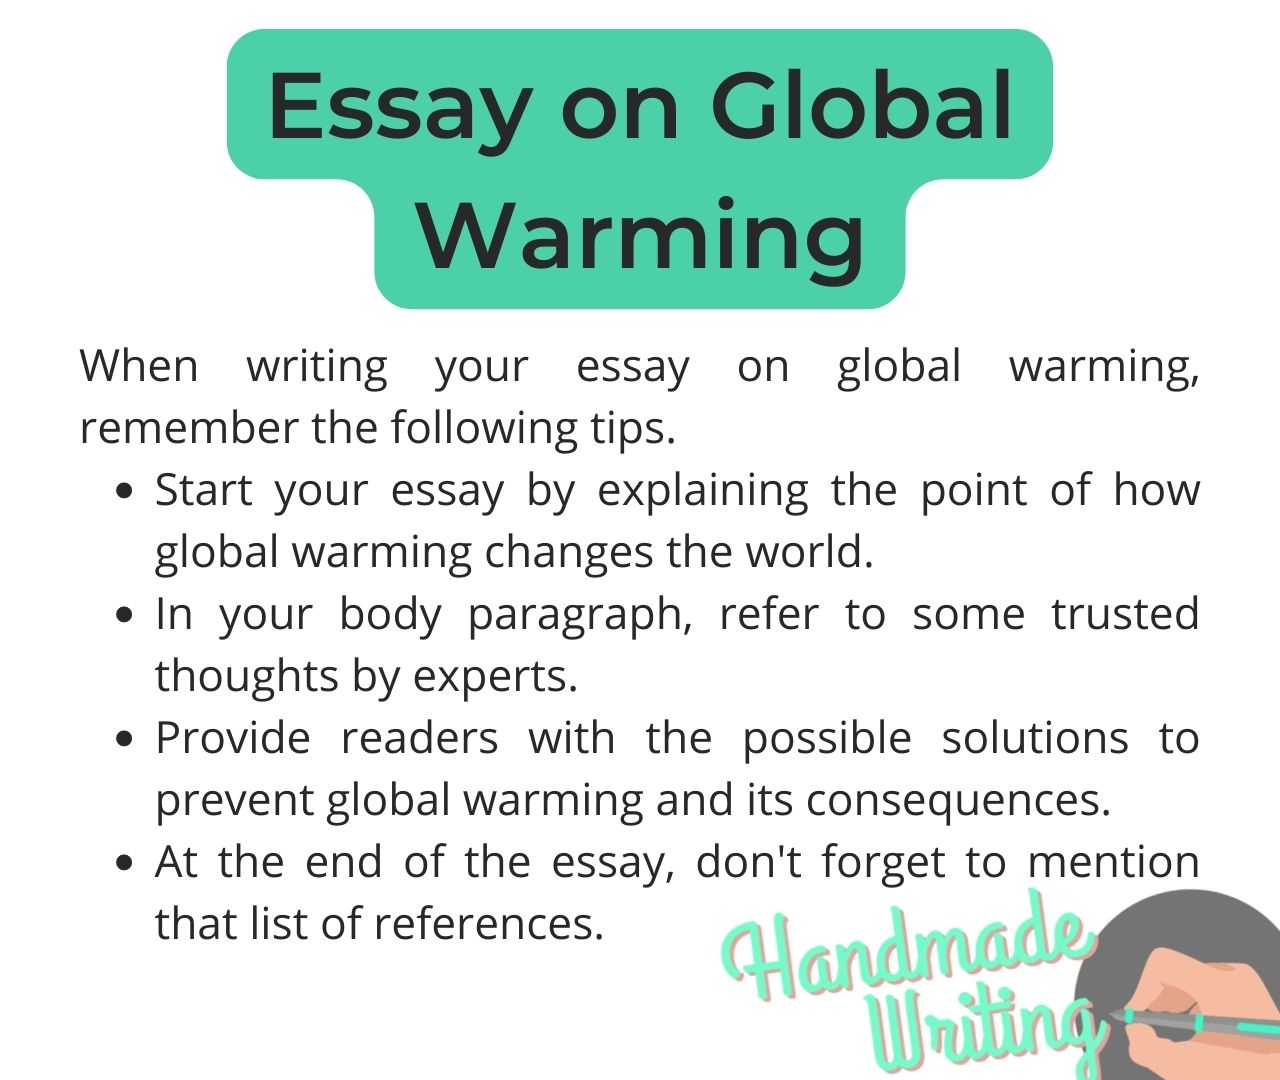 global warming essay in hindi drishti ias